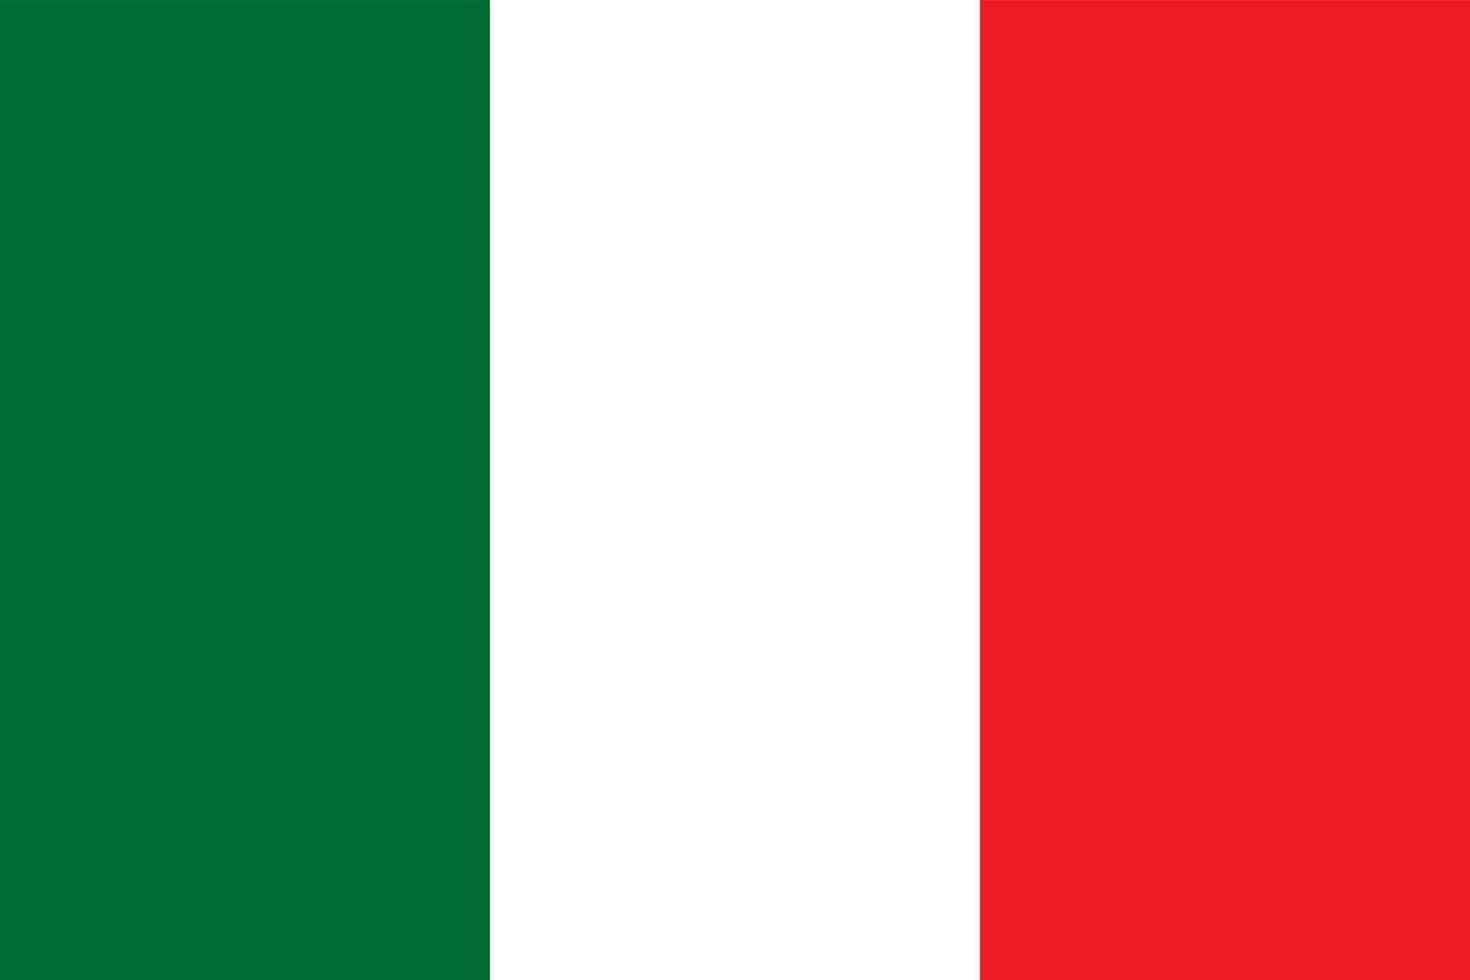 Italy officially flag vector